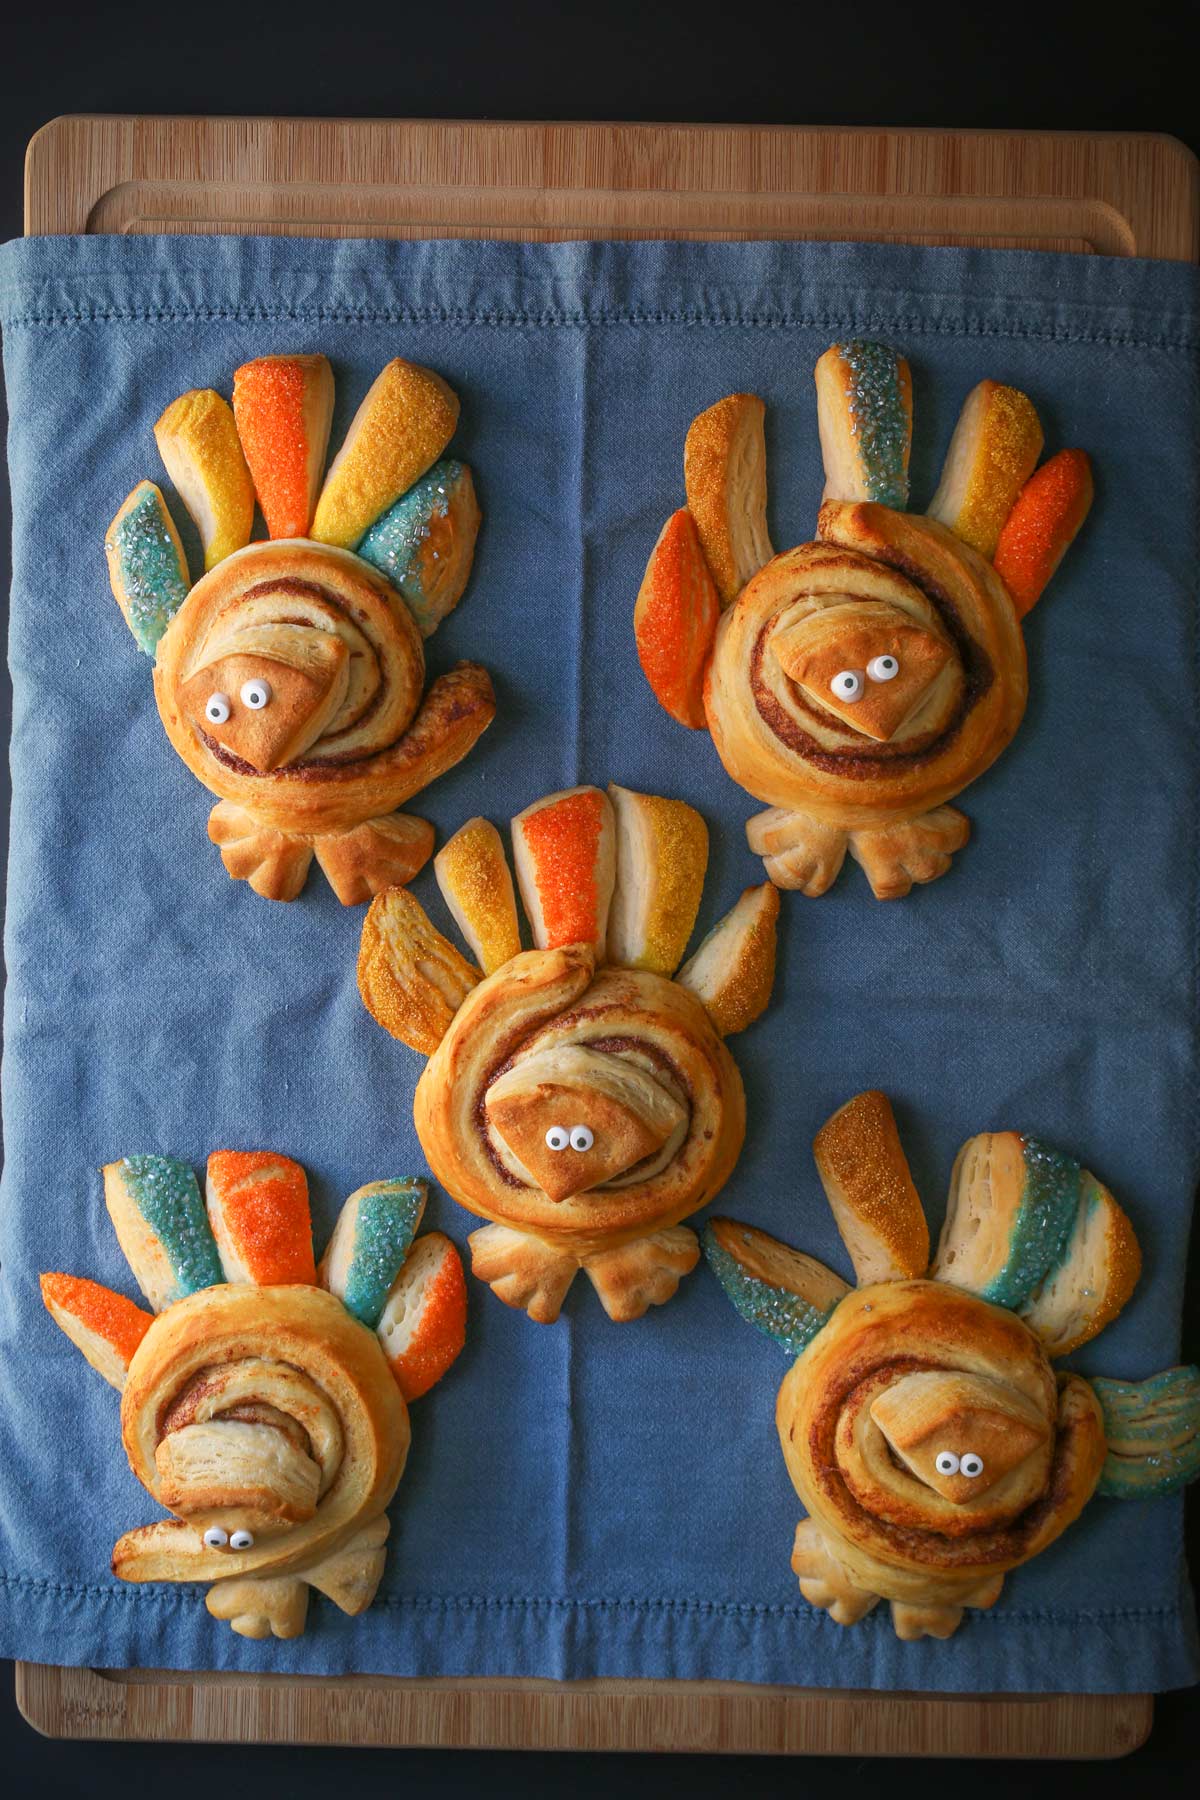 array of five cinnamon roll turkeys on a blue cloth on a wooden board.